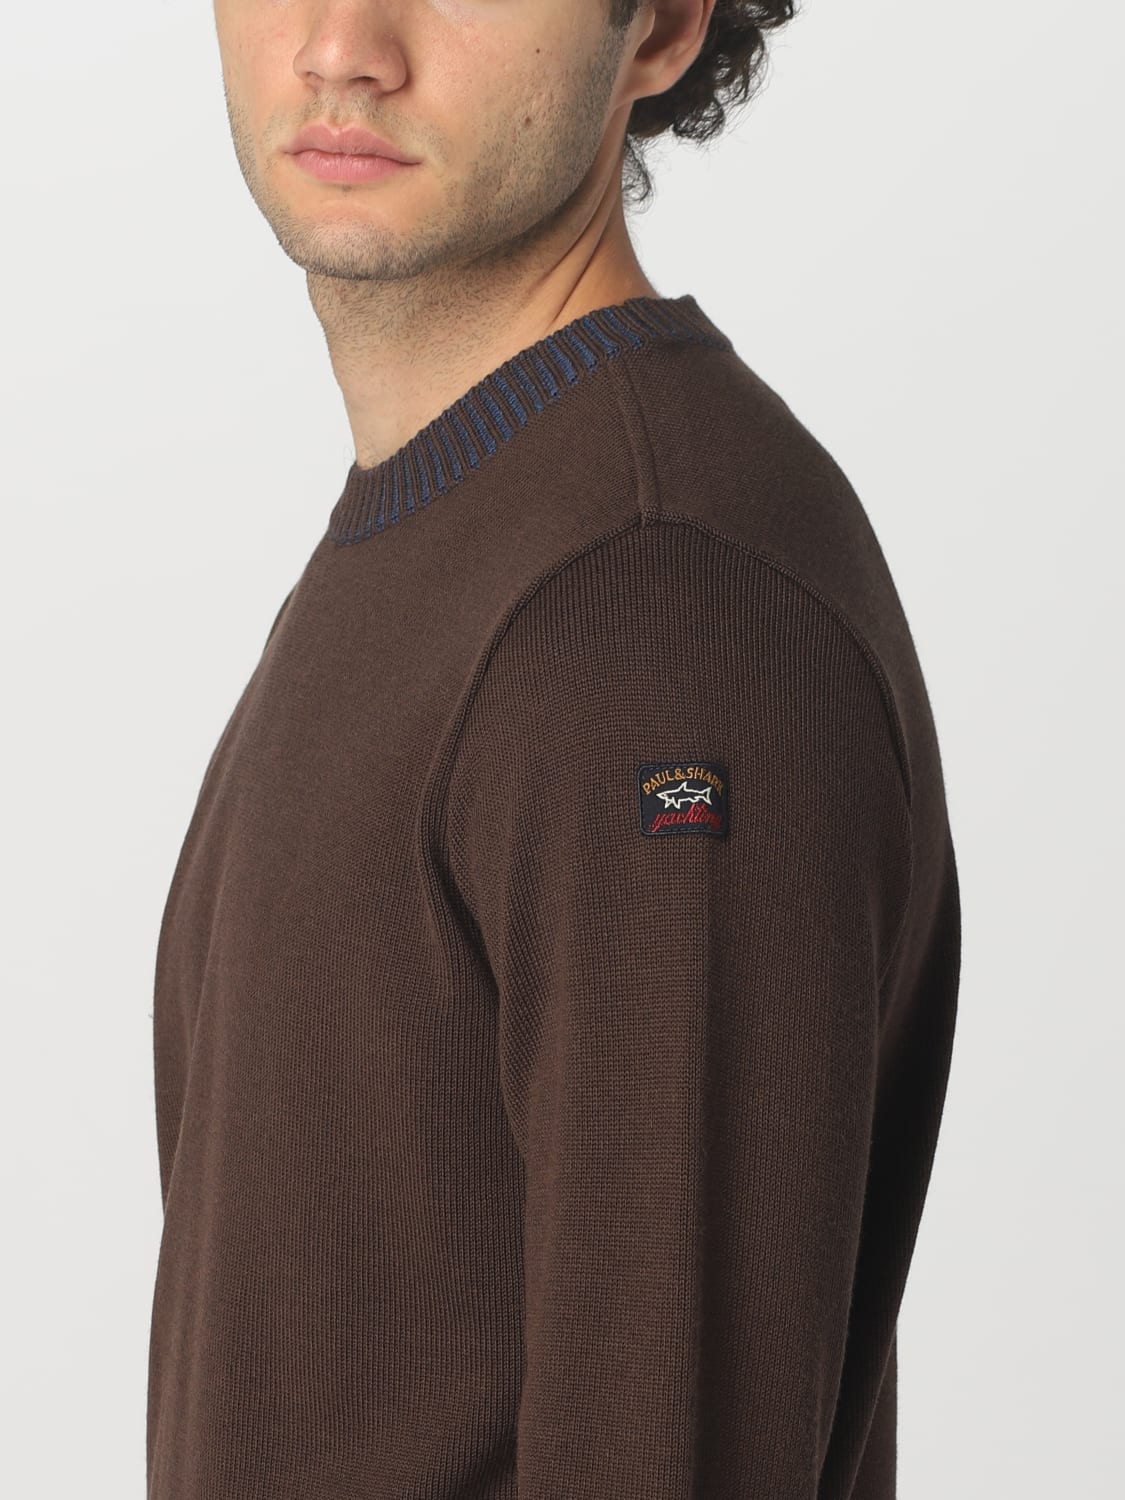 PAUL & SHARK: sweater for man - Brown | Paul & Shark sweater 13311022 ...